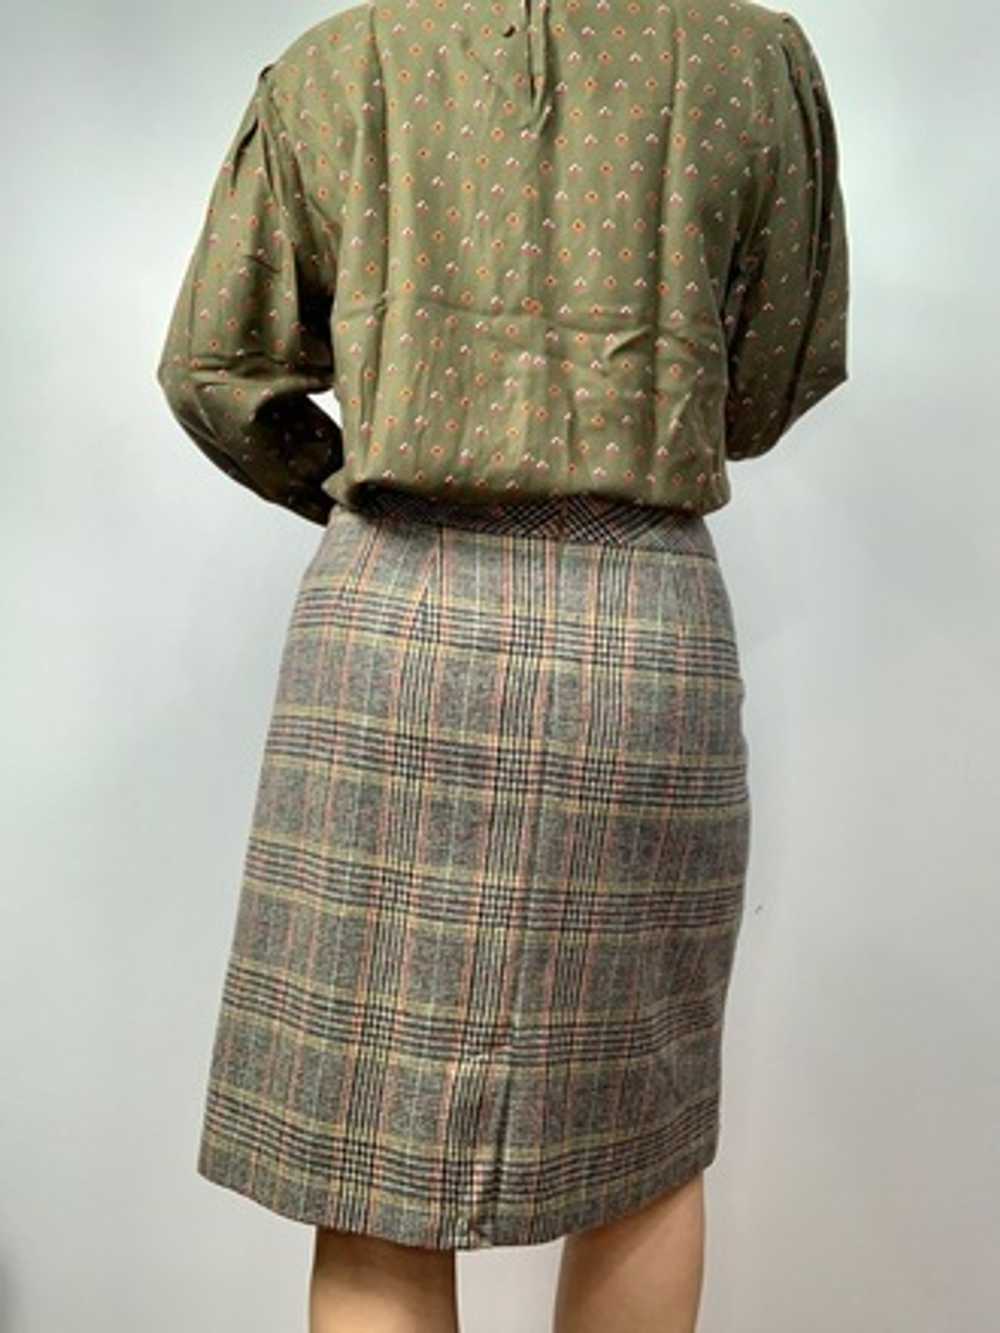 Gorgeous Wool Plaid Skirt - image 3